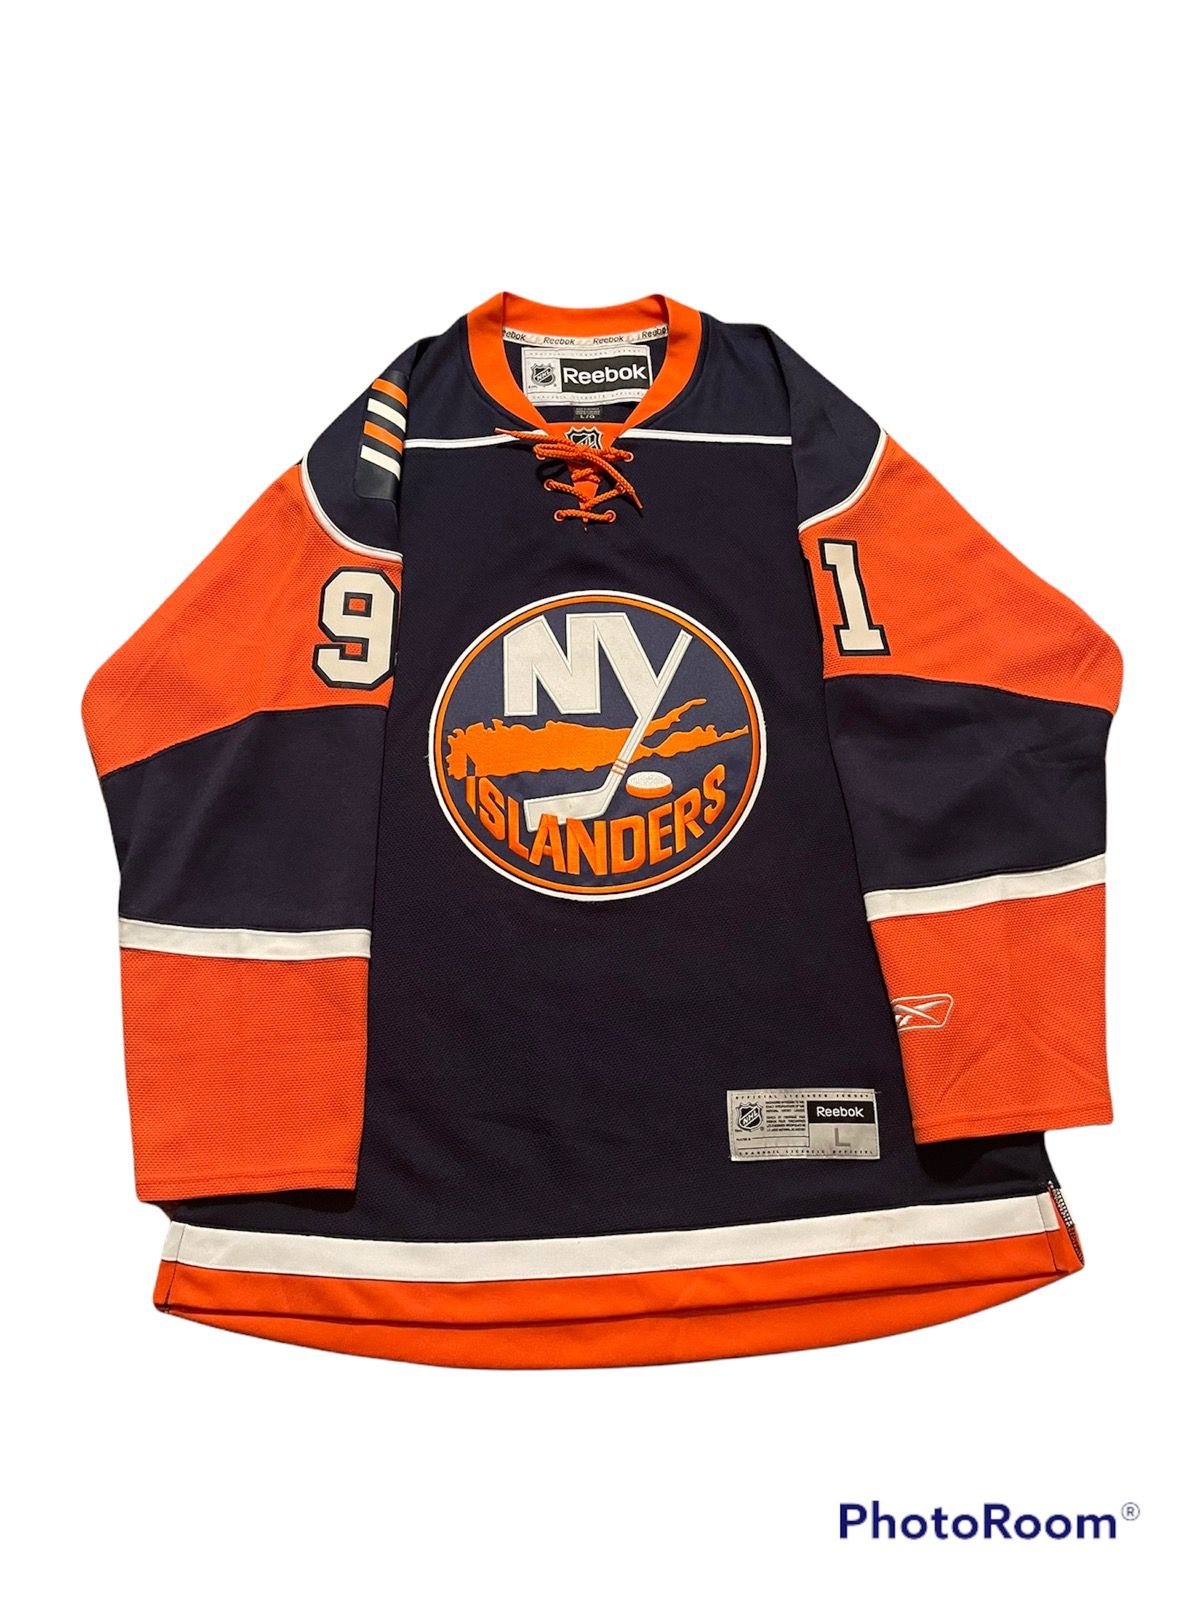 Vintage New York Islanders John Tavares #91 Hockey Jersey Large Size US L / EU 52-54 / 3 - 1 Preview